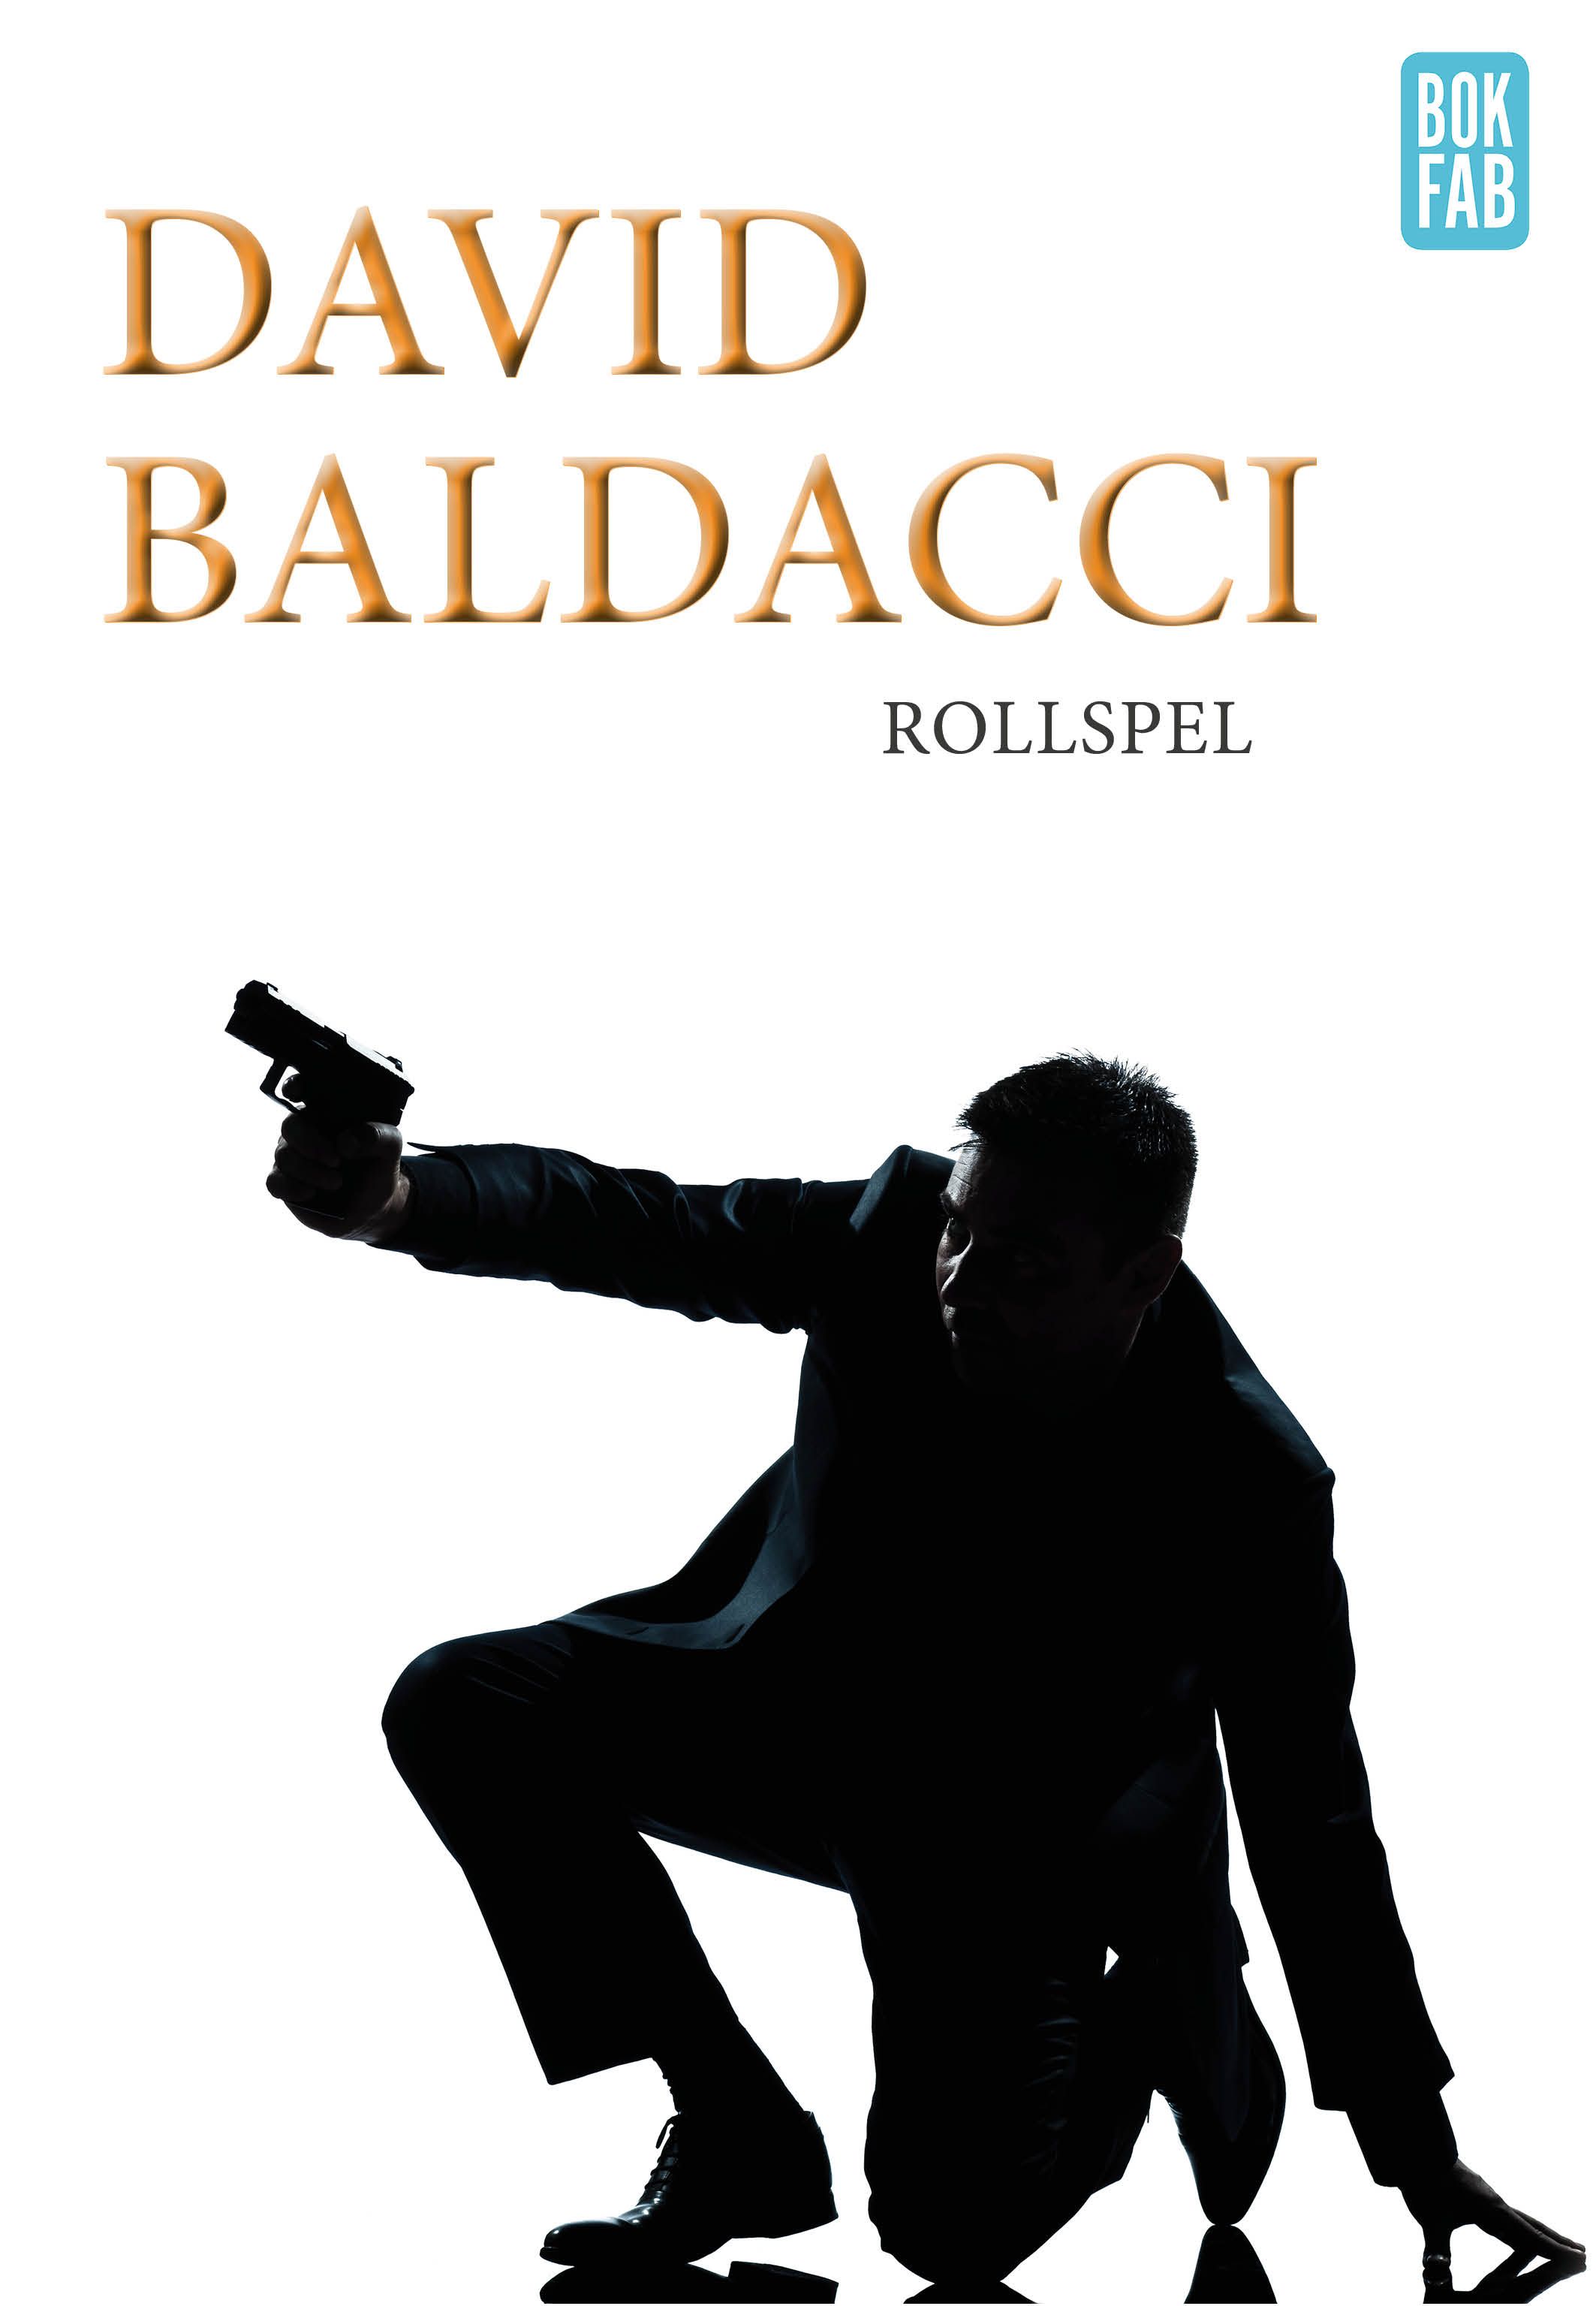 Rollspel, eBook by David Baldacci